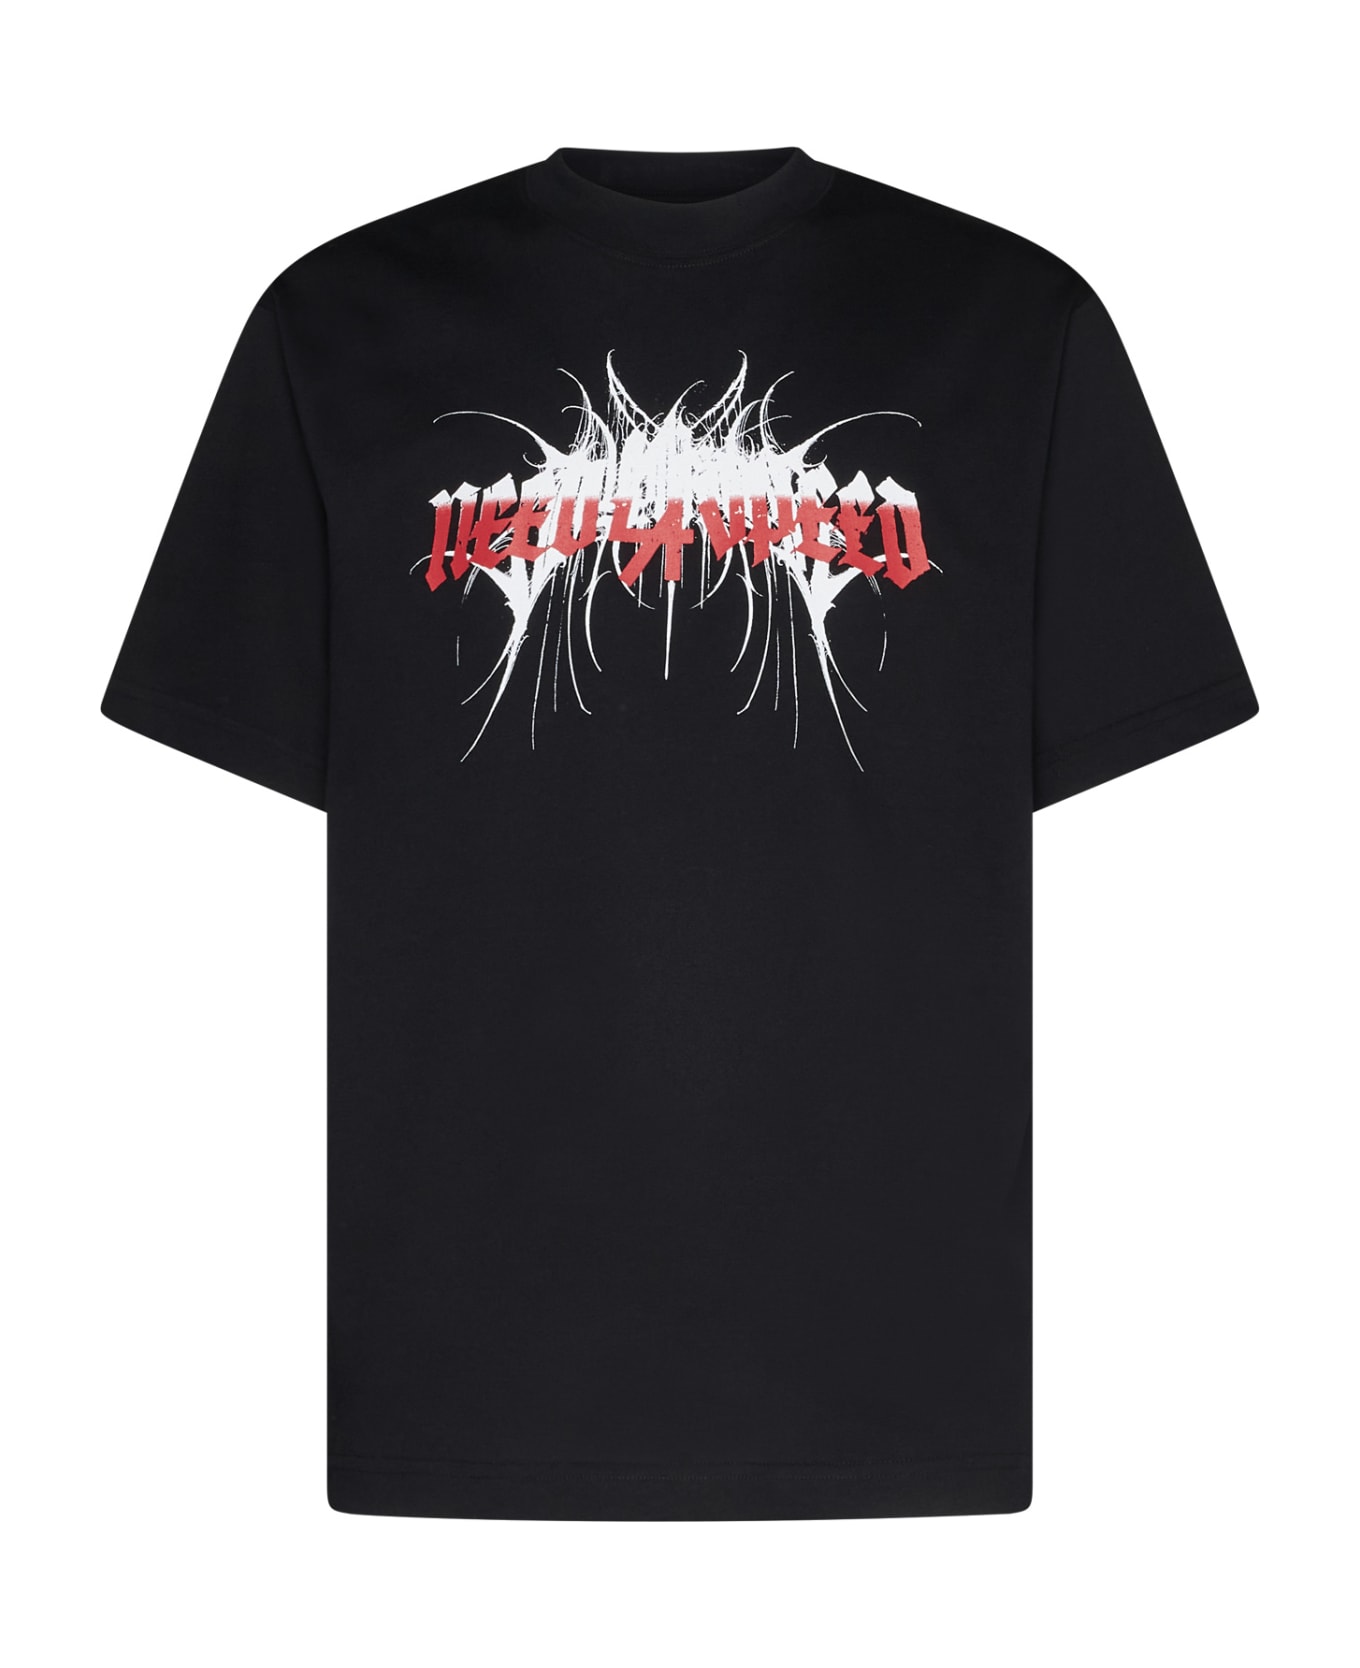 44 Label Group T-Shirt - Black+speed demon print シャツ